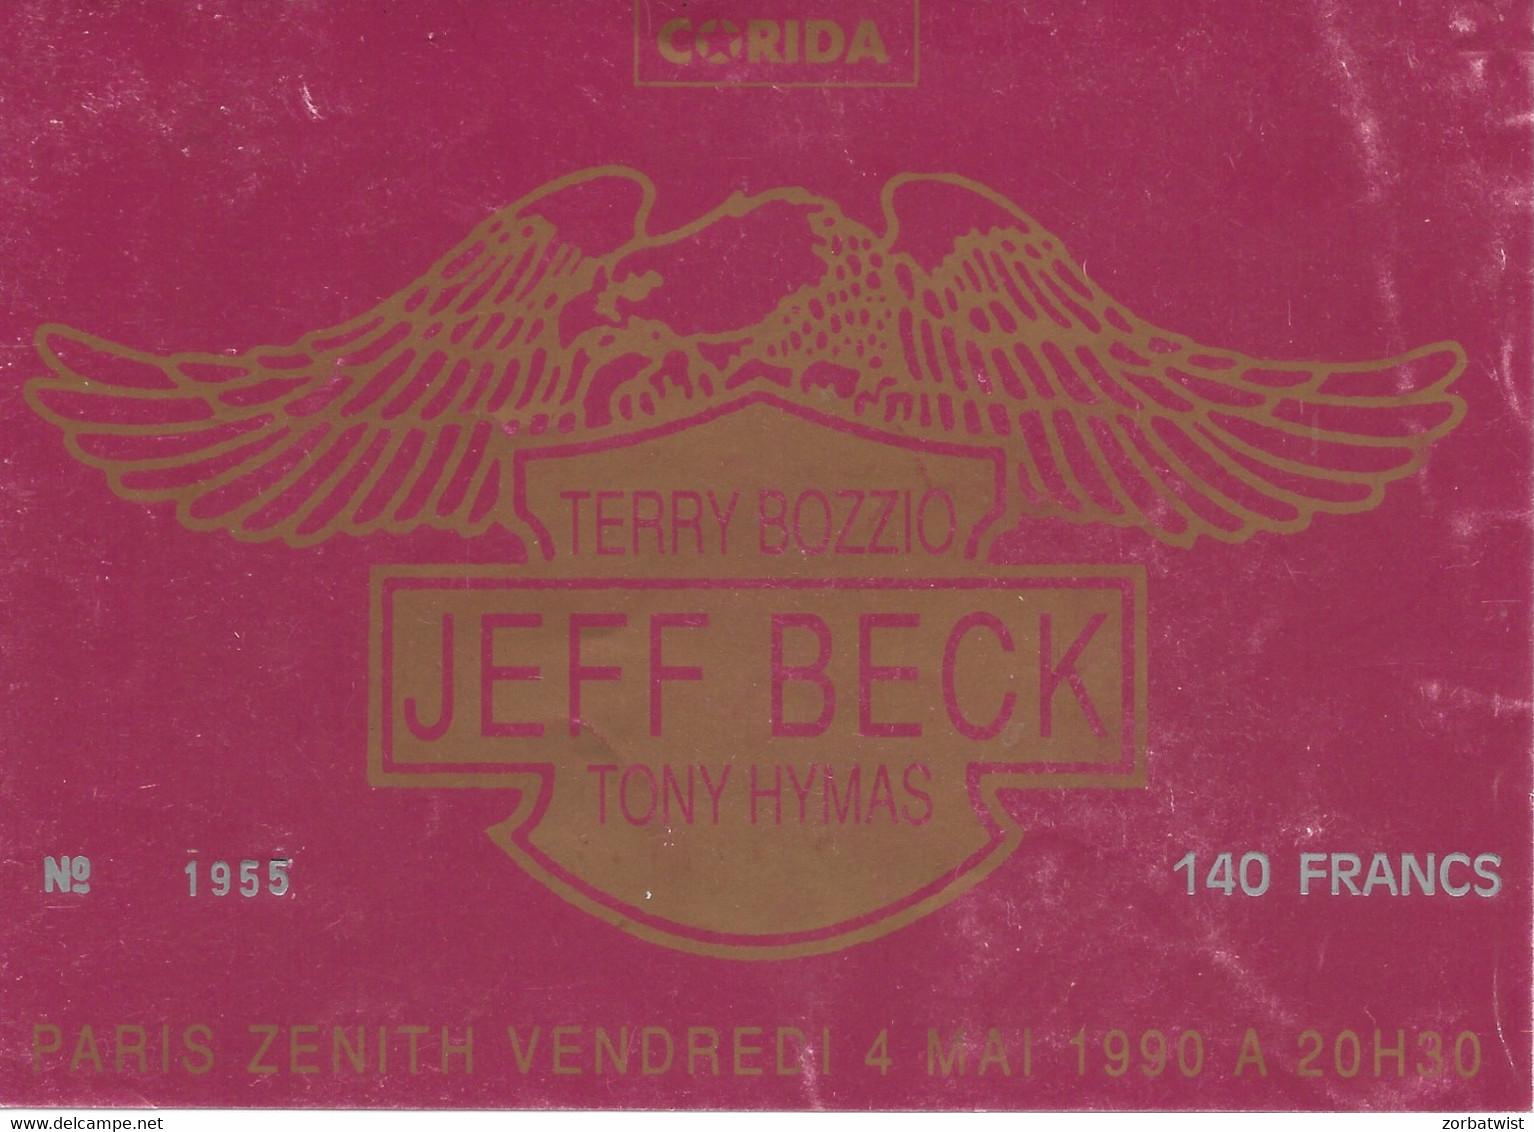 TICKET DE CONCERT JEFF BECK LE ZENITH PARIS 4/05/1990 - Concert Tickets